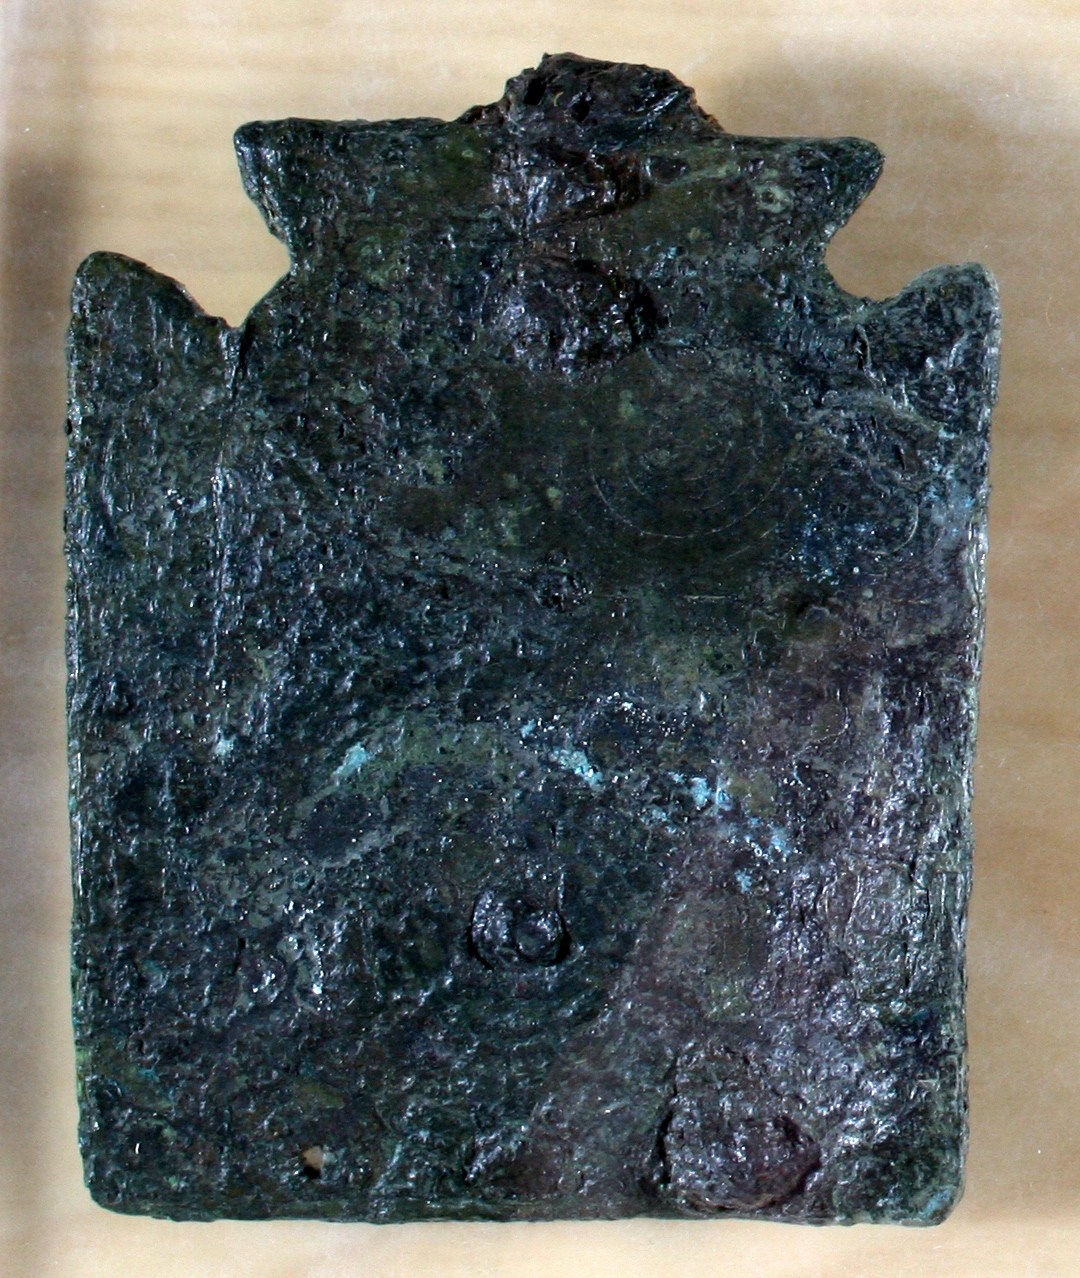 Placa de cinturón de bronce. Necrópolis Avda. Martínez de Velasco (Huesca). NIG 07785. ©Foto Fernando Alvira. Museo de Huesca.